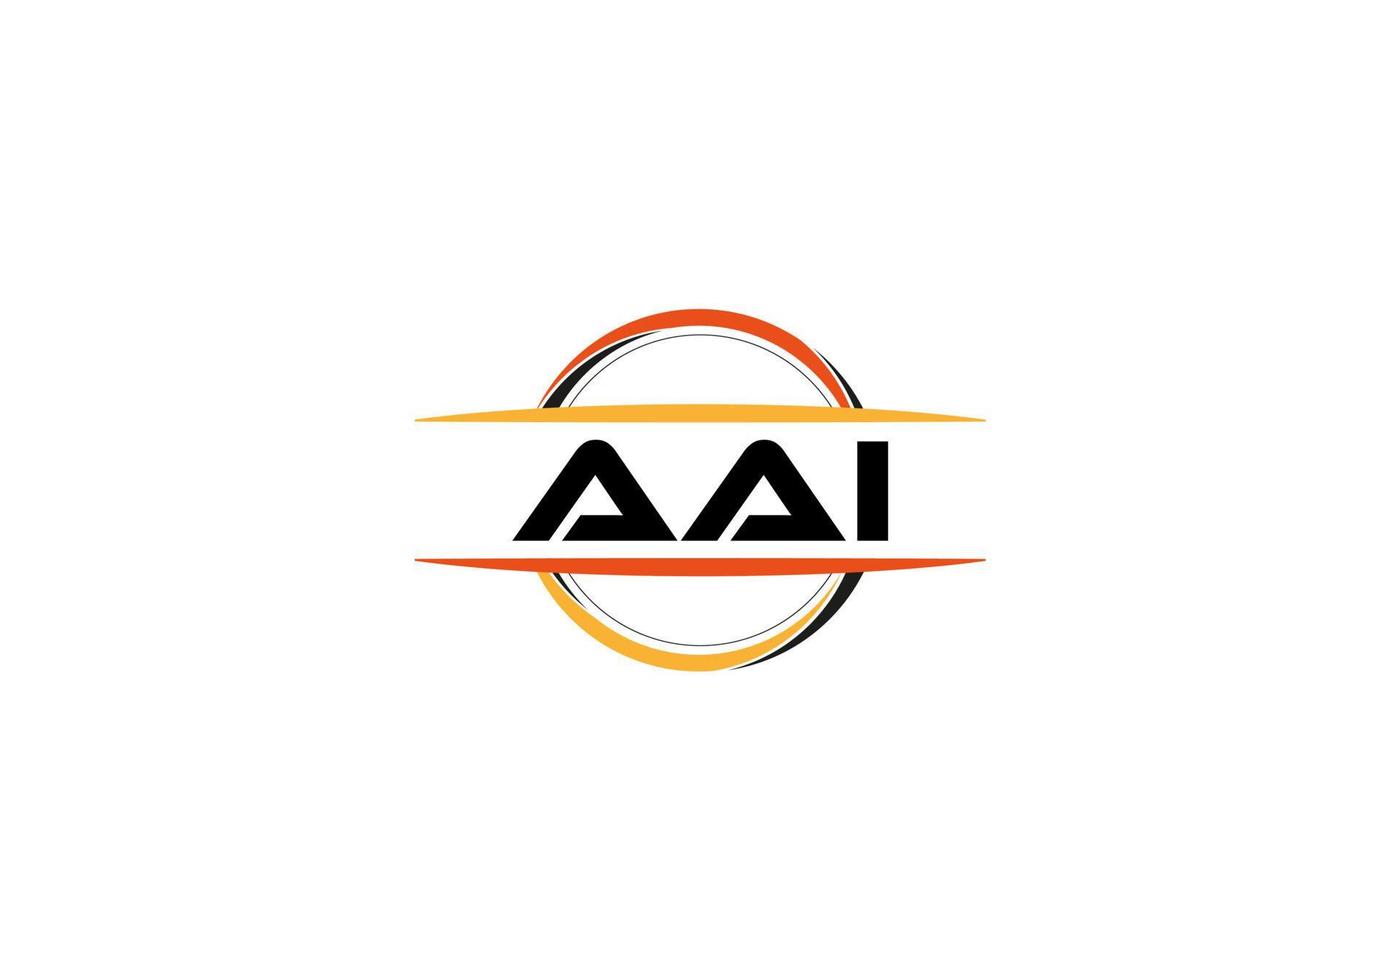 aai letra realeza elipse forma logo. aai cepillo Arte logo. aai logo para un compañía, negocio, y comercial usar. vector